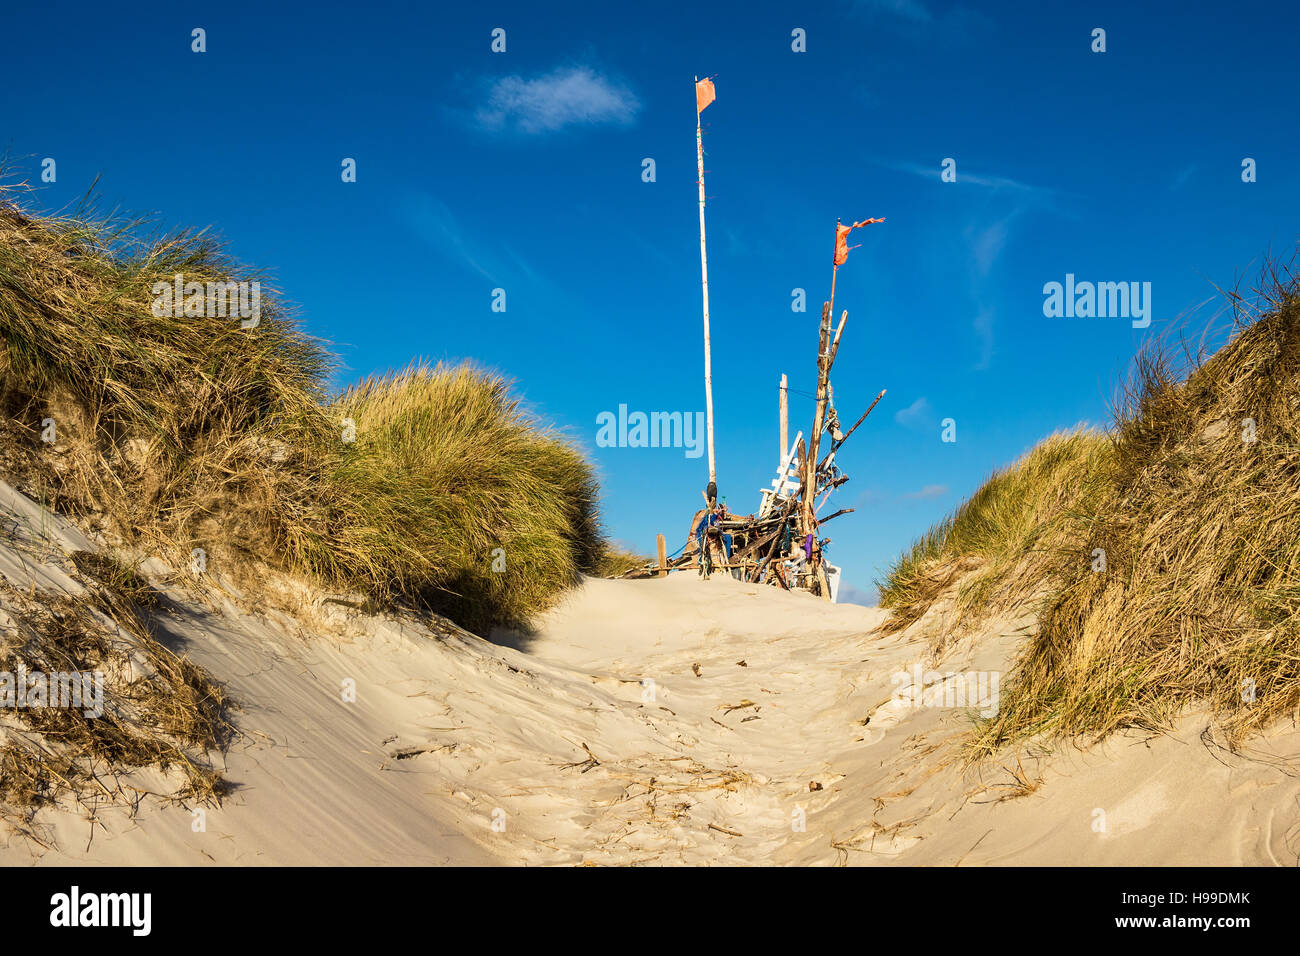 Dunes on the North Sea coast on the island Amrum, Germany Stock Photo